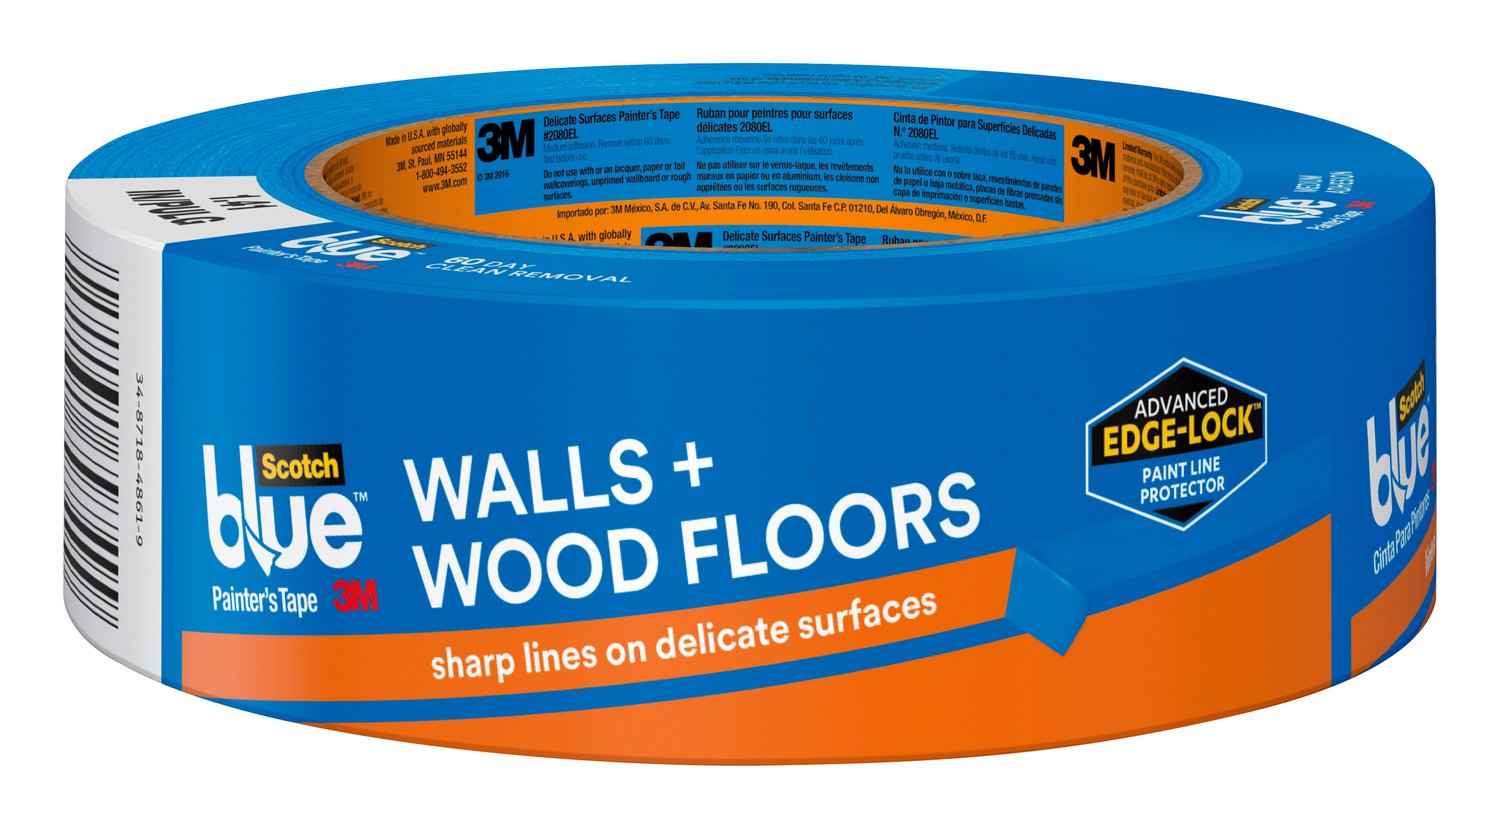 7100105084 - ScotchBlue WALLS + WOOD FLOORS Painter's Tape 2080EL-36CVP, 1.41 in x
60 yd (36 mm x 54,8 m), 1 Roll/Pack